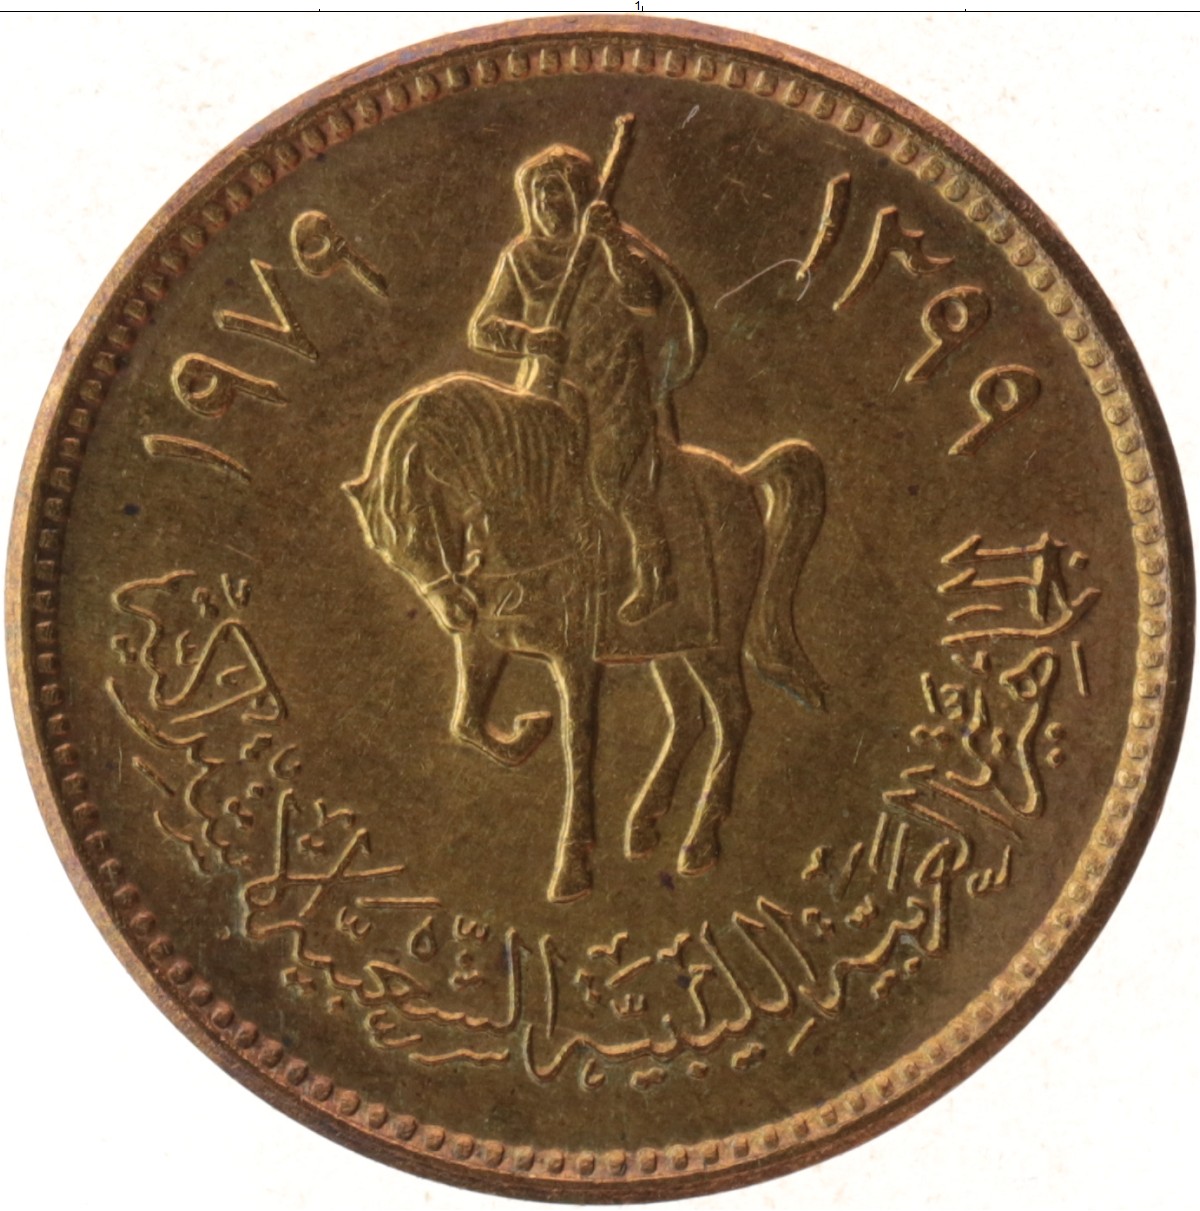 550 дирхам. Монета 20 дирхам 1979 Ливия. Монеты Ливия. Libya монеты. 50 Дирхам монета.